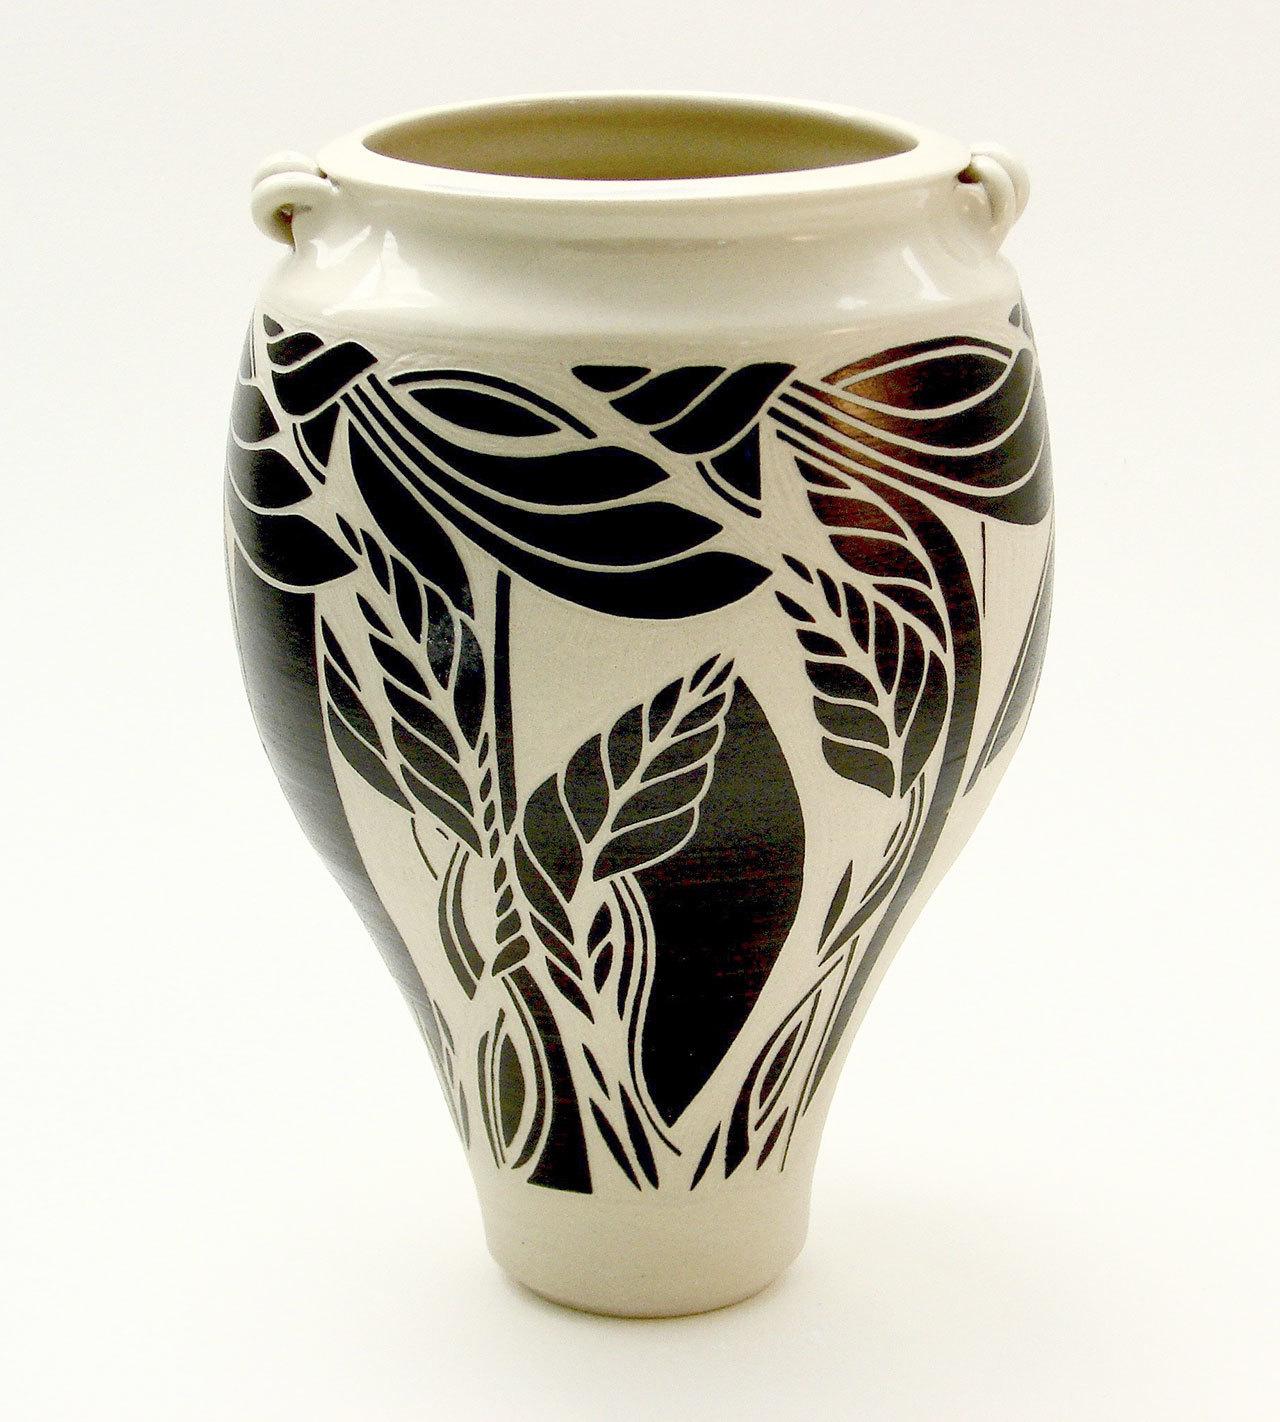 A vase by Linda Collins Chapman.